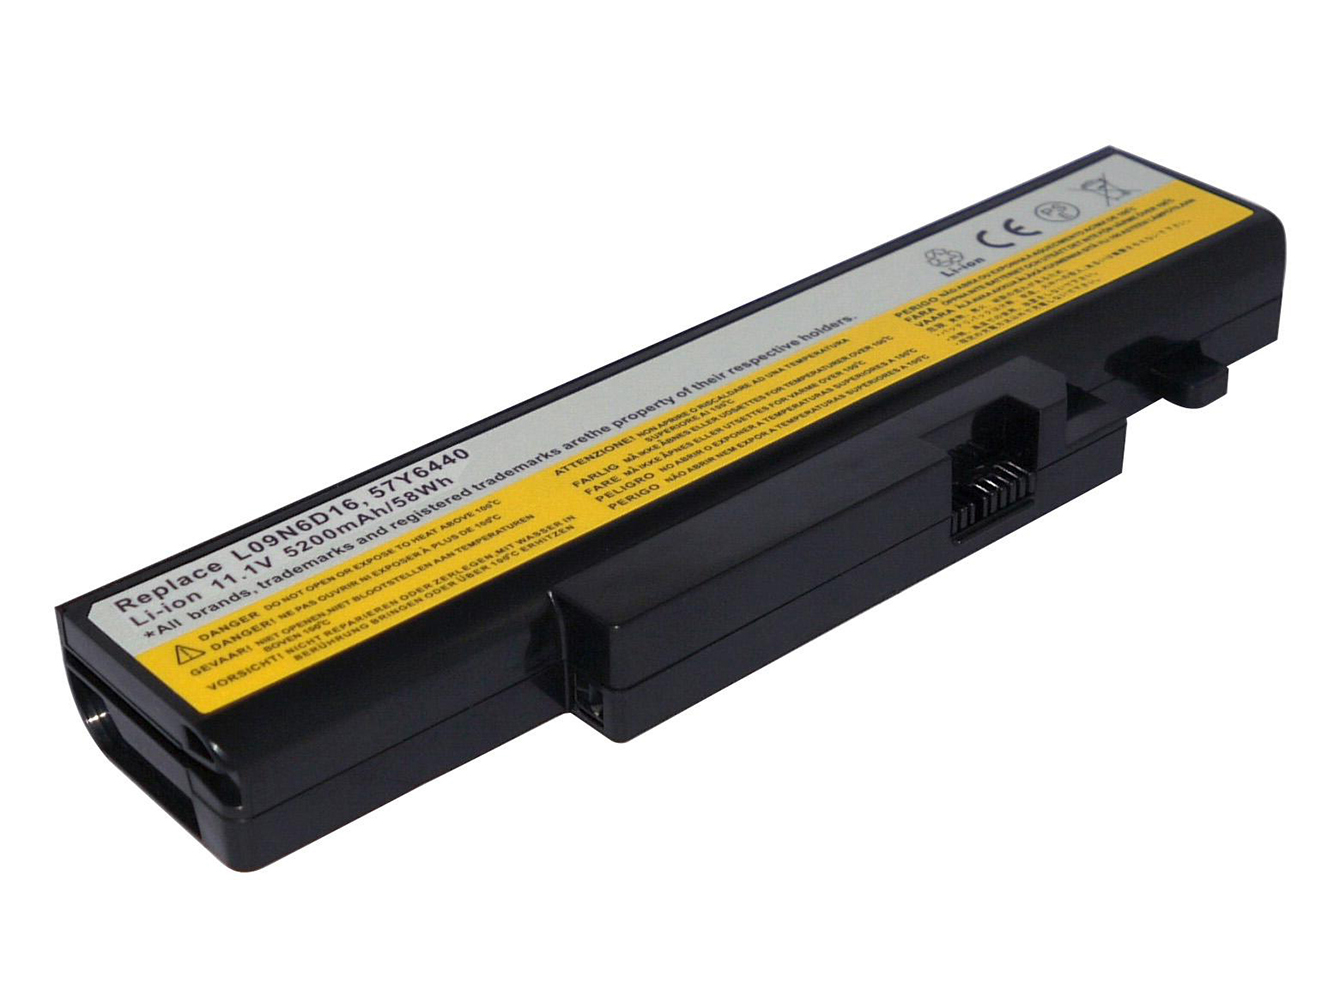 Replacement for LENOVO IdeaPad B560, IdeaPad Y460, IdeaPad V560, IdeaPad Y560 Series Laptop Battery